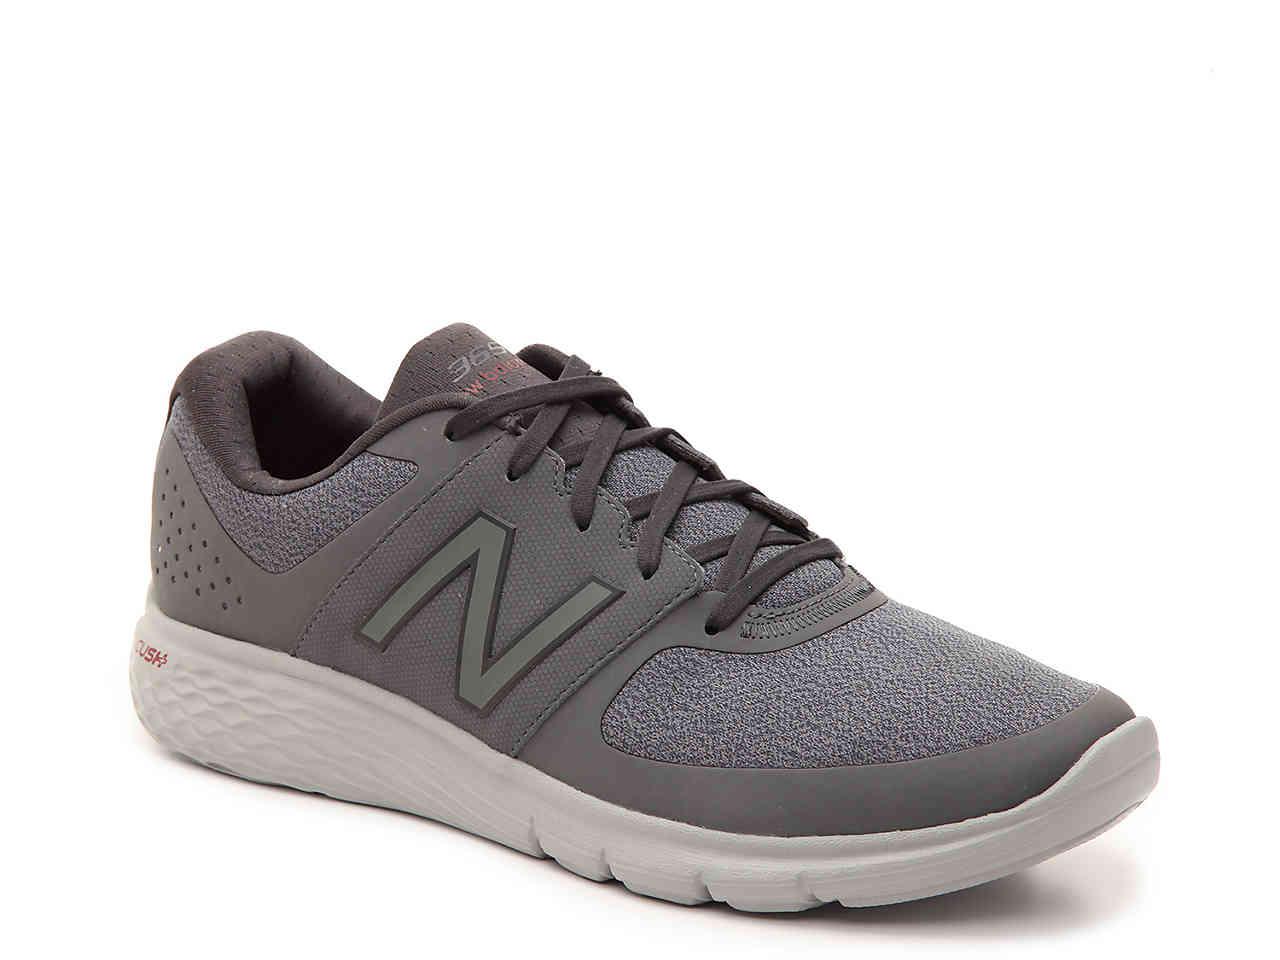 New Balance 365 Walking Shoe in Grey 